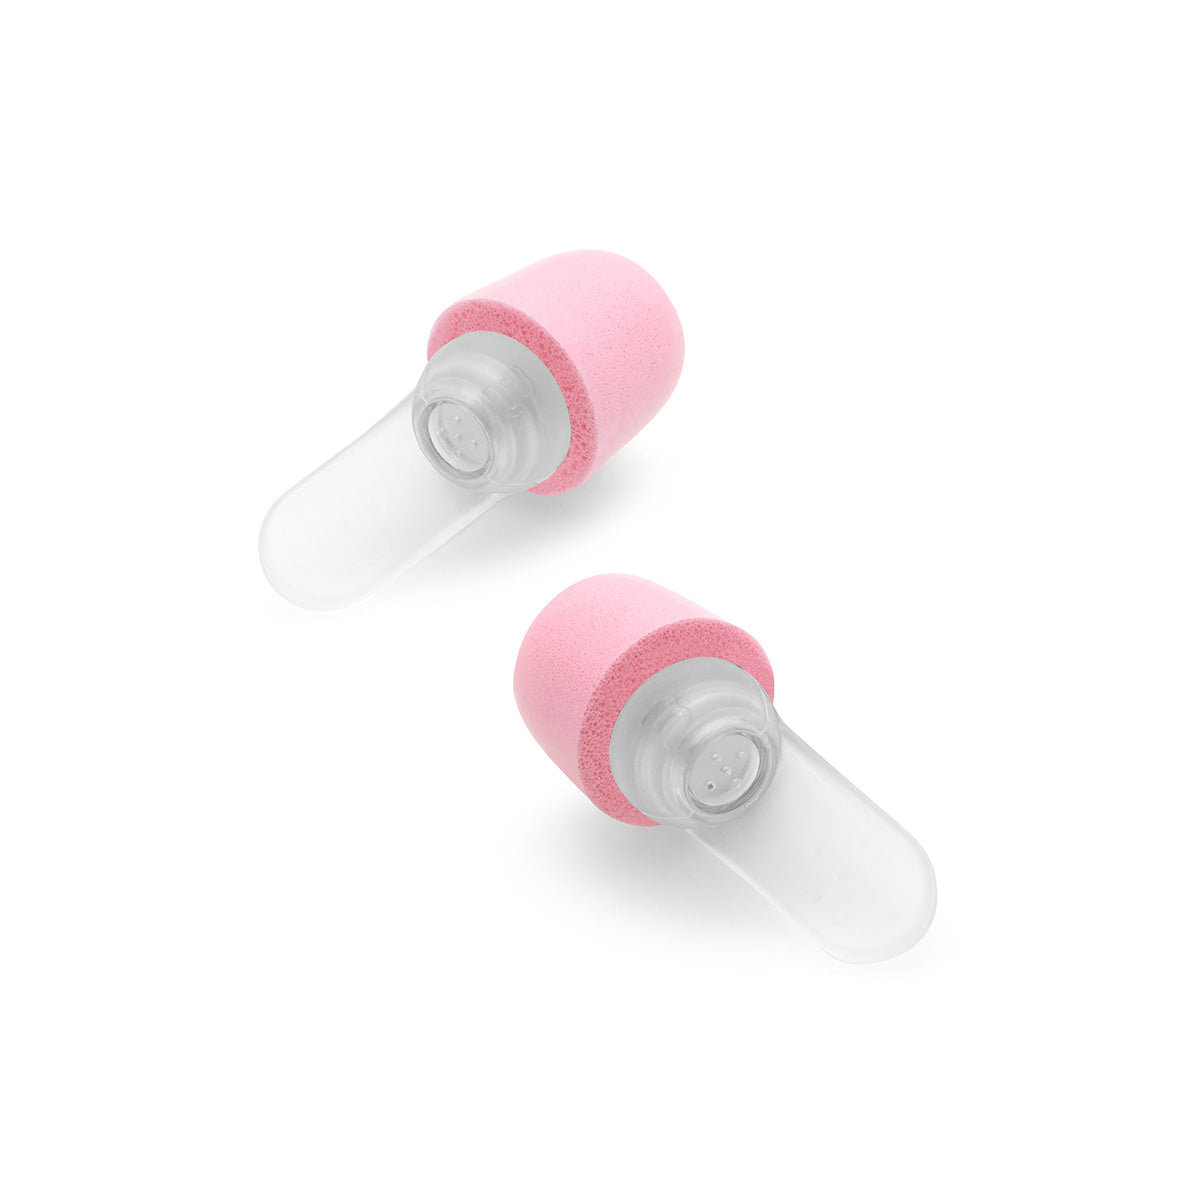 ADV. Eartune Live Foam Musician Concert Ear Plugs Filter High Fidelity Memory Foam #color_rose-pink